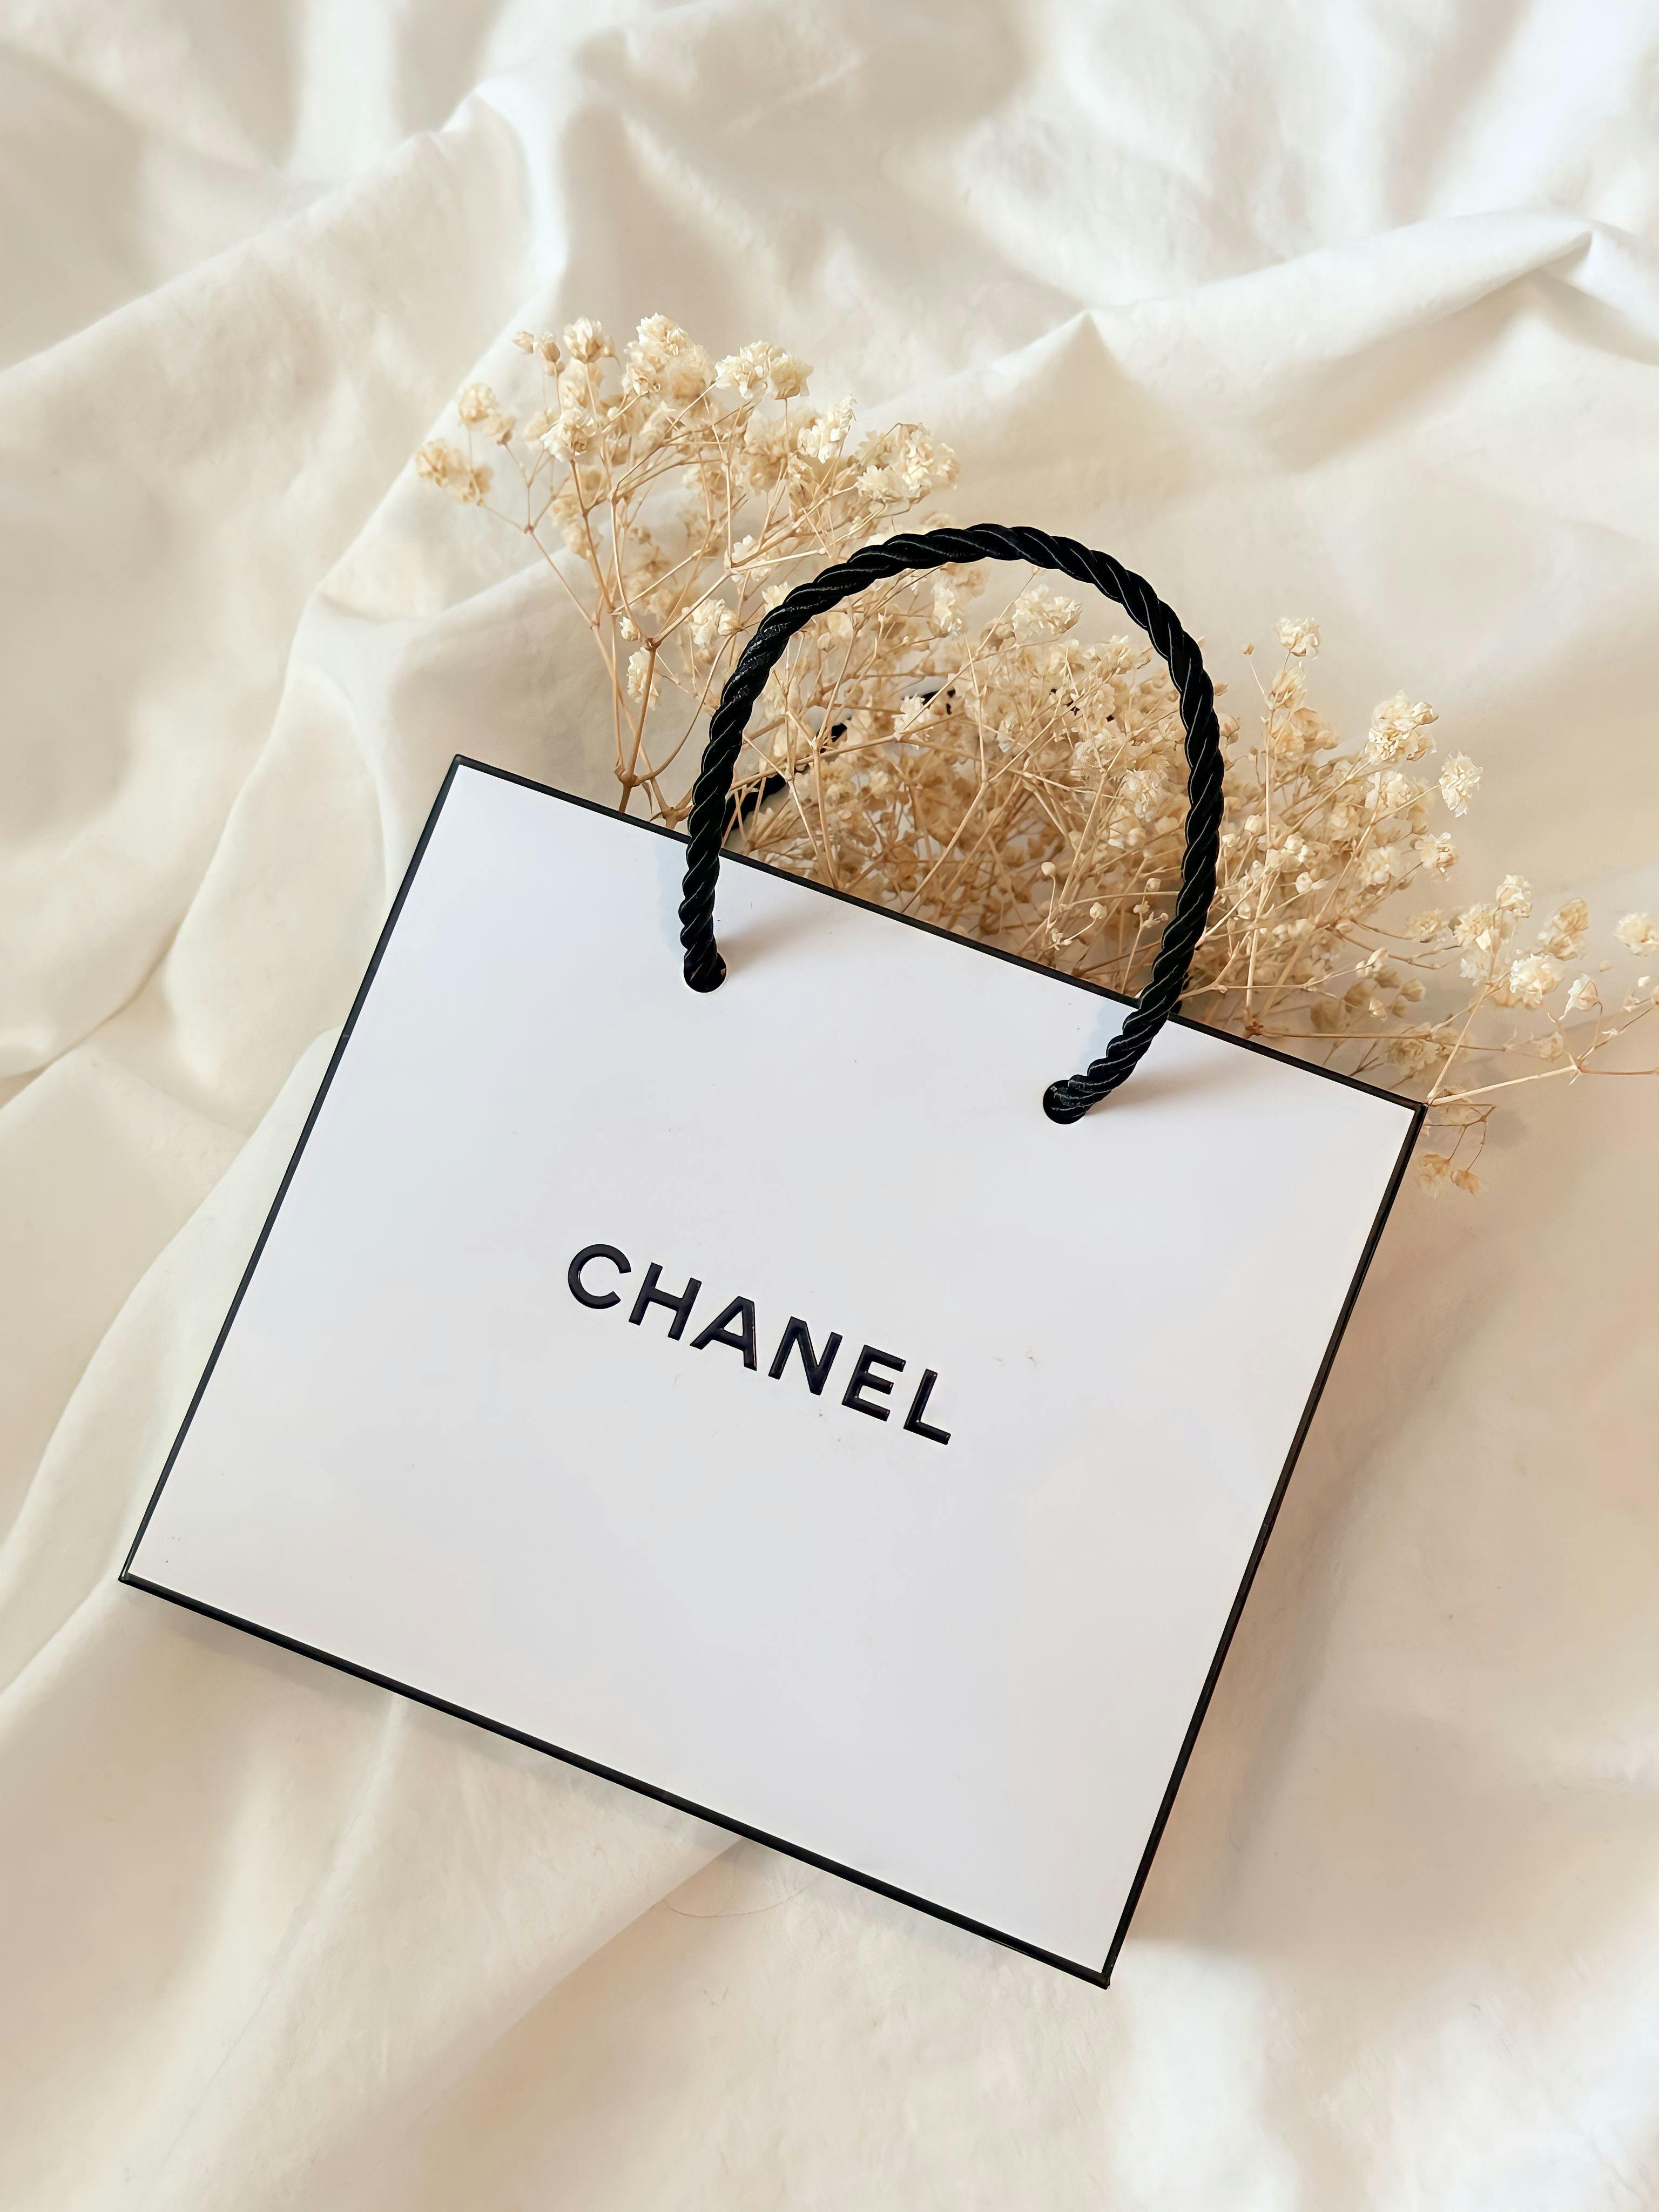 Chanel Bag Wallpapers - Wallpaper Cave